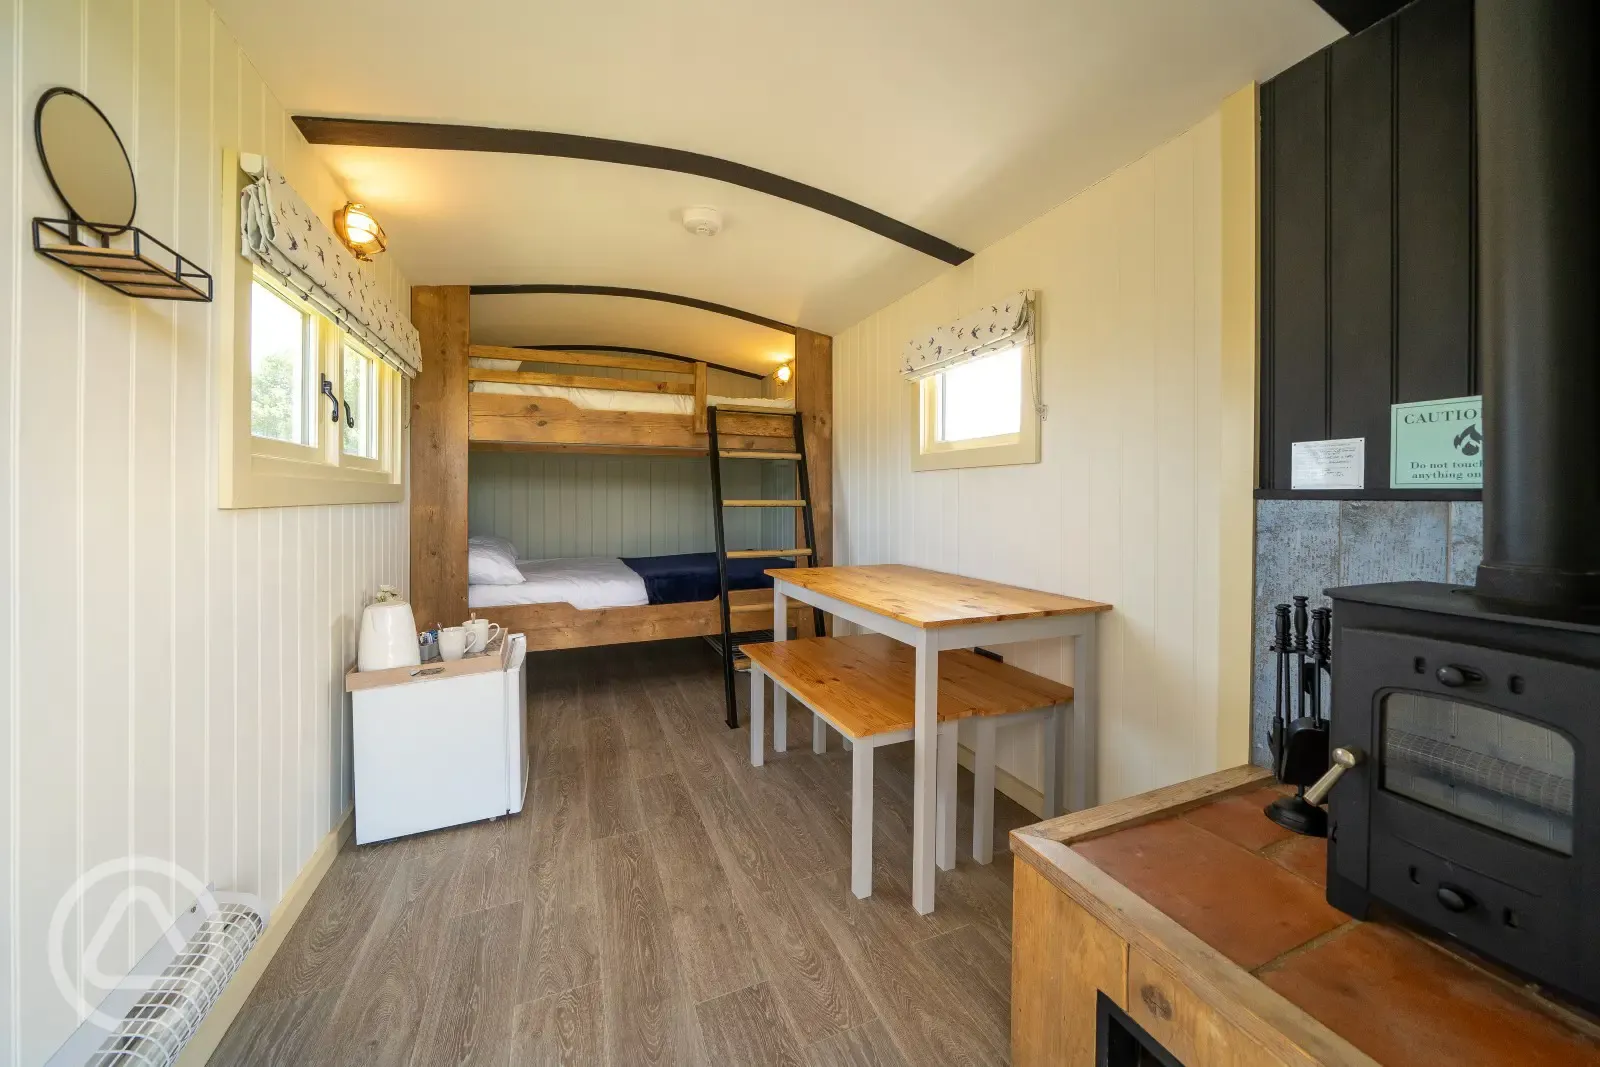 Shepherd's Hut with bunkbeds